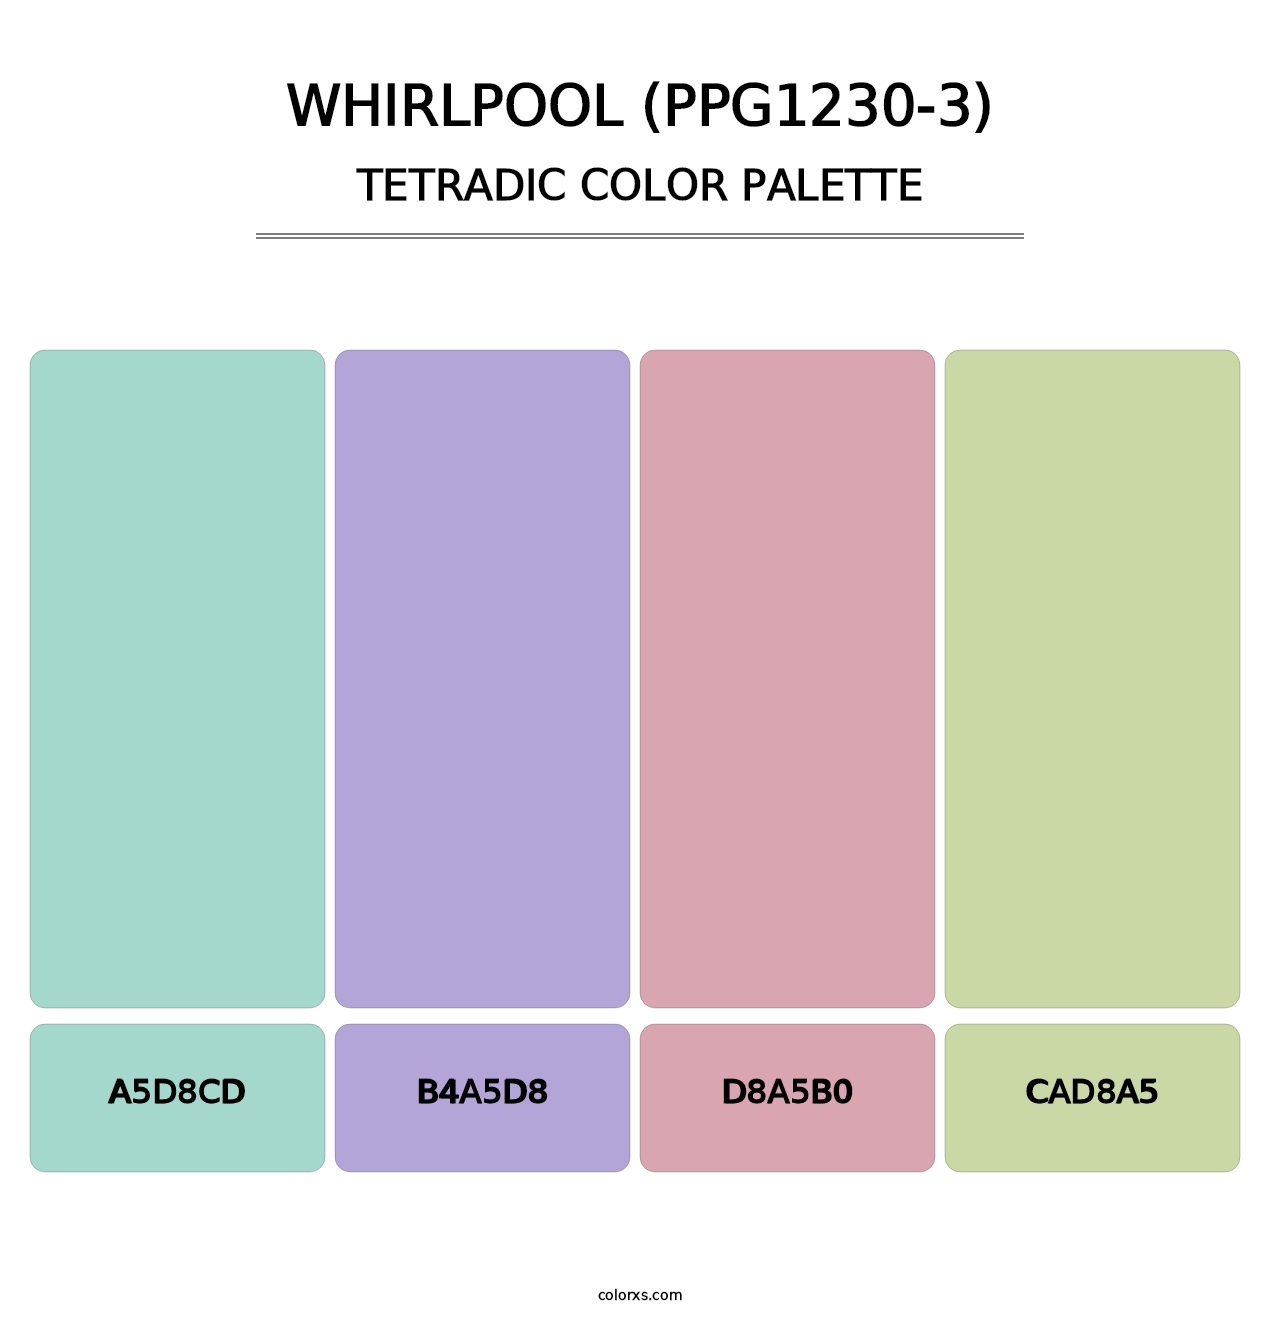 Whirlpool (PPG1230-3) - Tetradic Color Palette